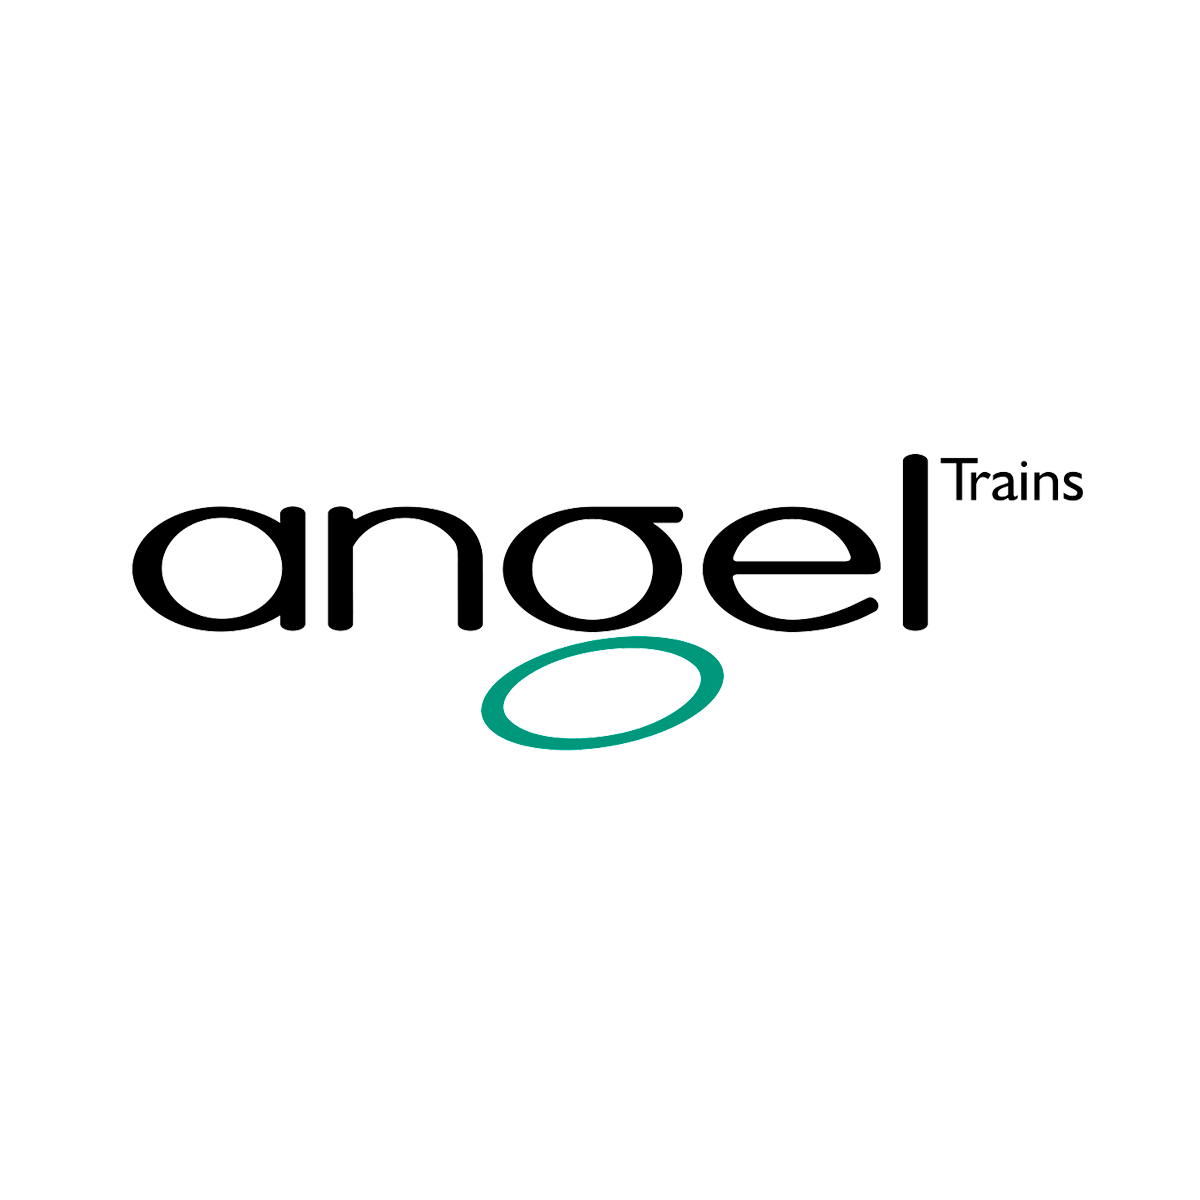 angel trains